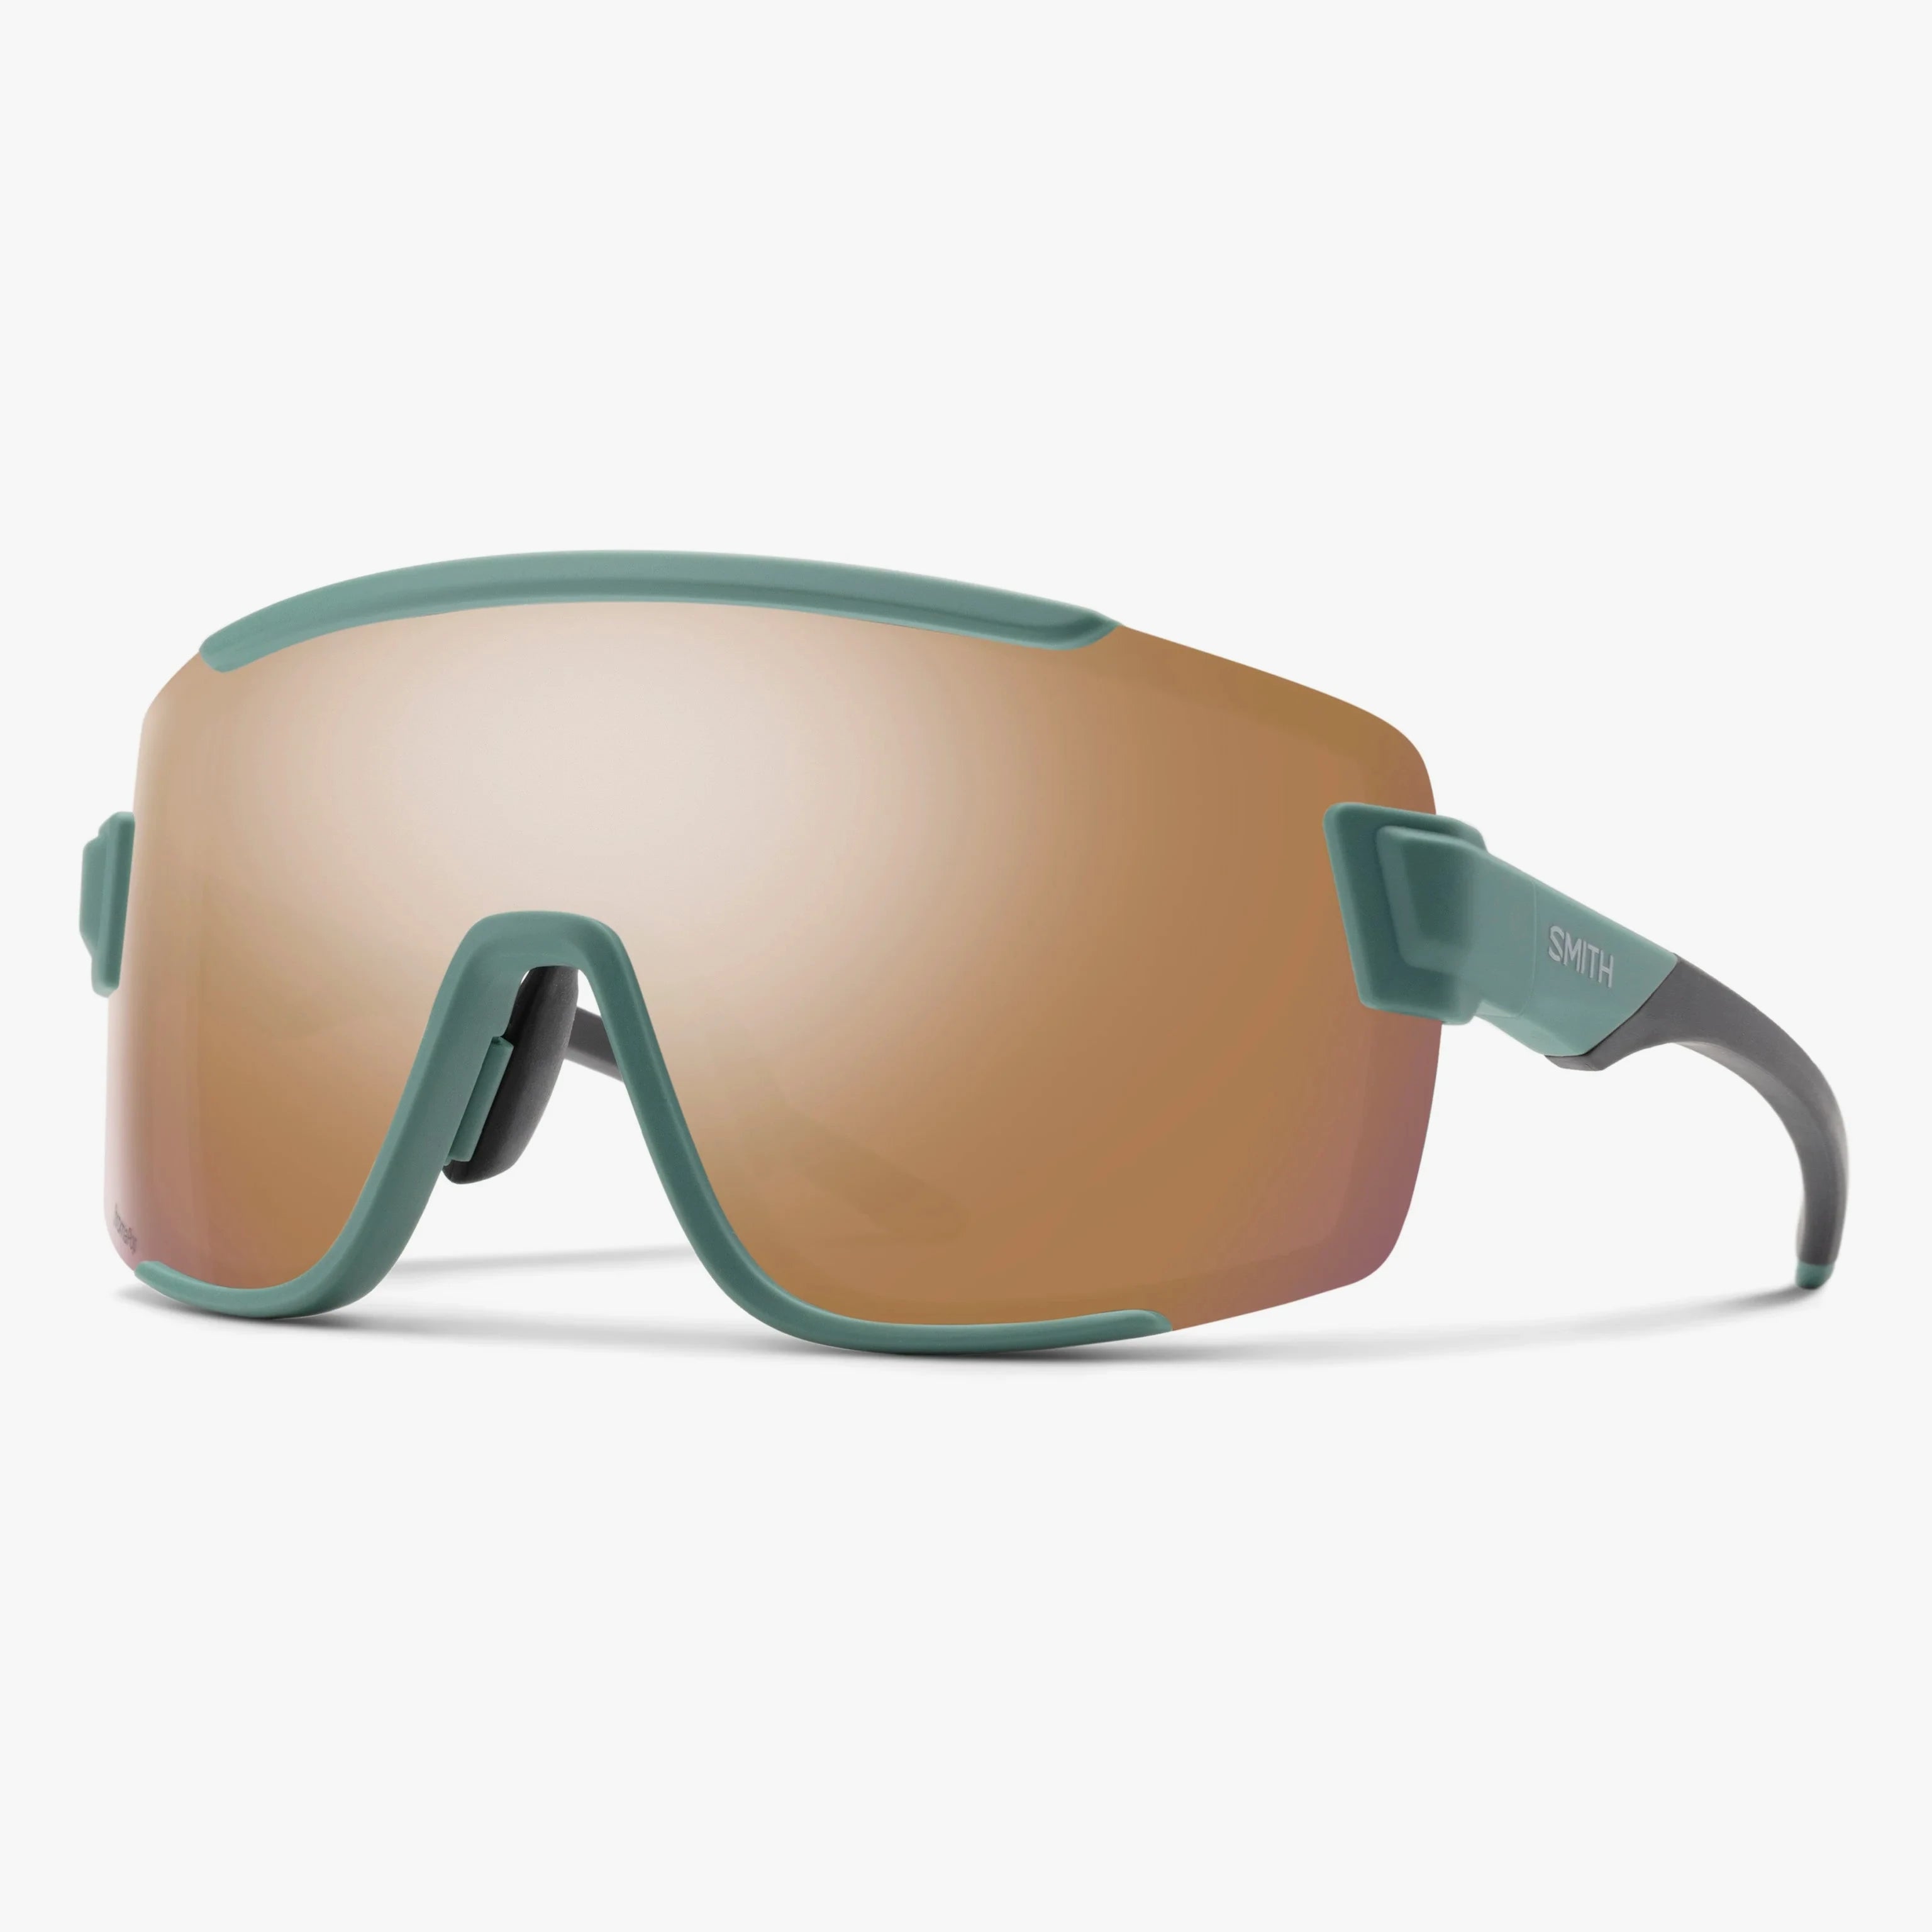 Smith Wildcat Cricket Sunglasses